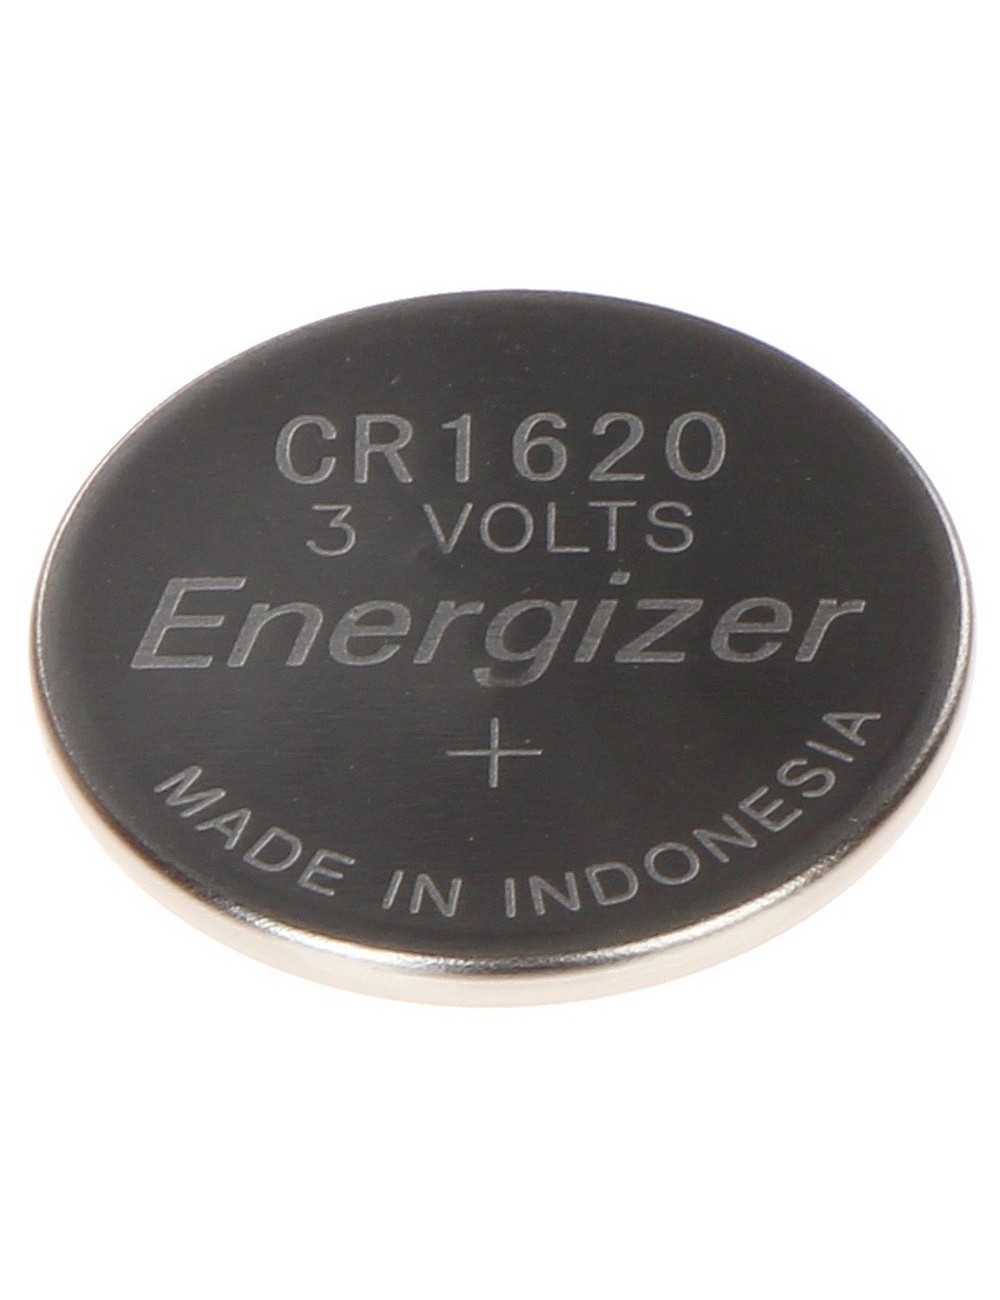 S CR1620 ENG (CR1620) Piles Lithium Bouton Energizer (3V - 79mAh)